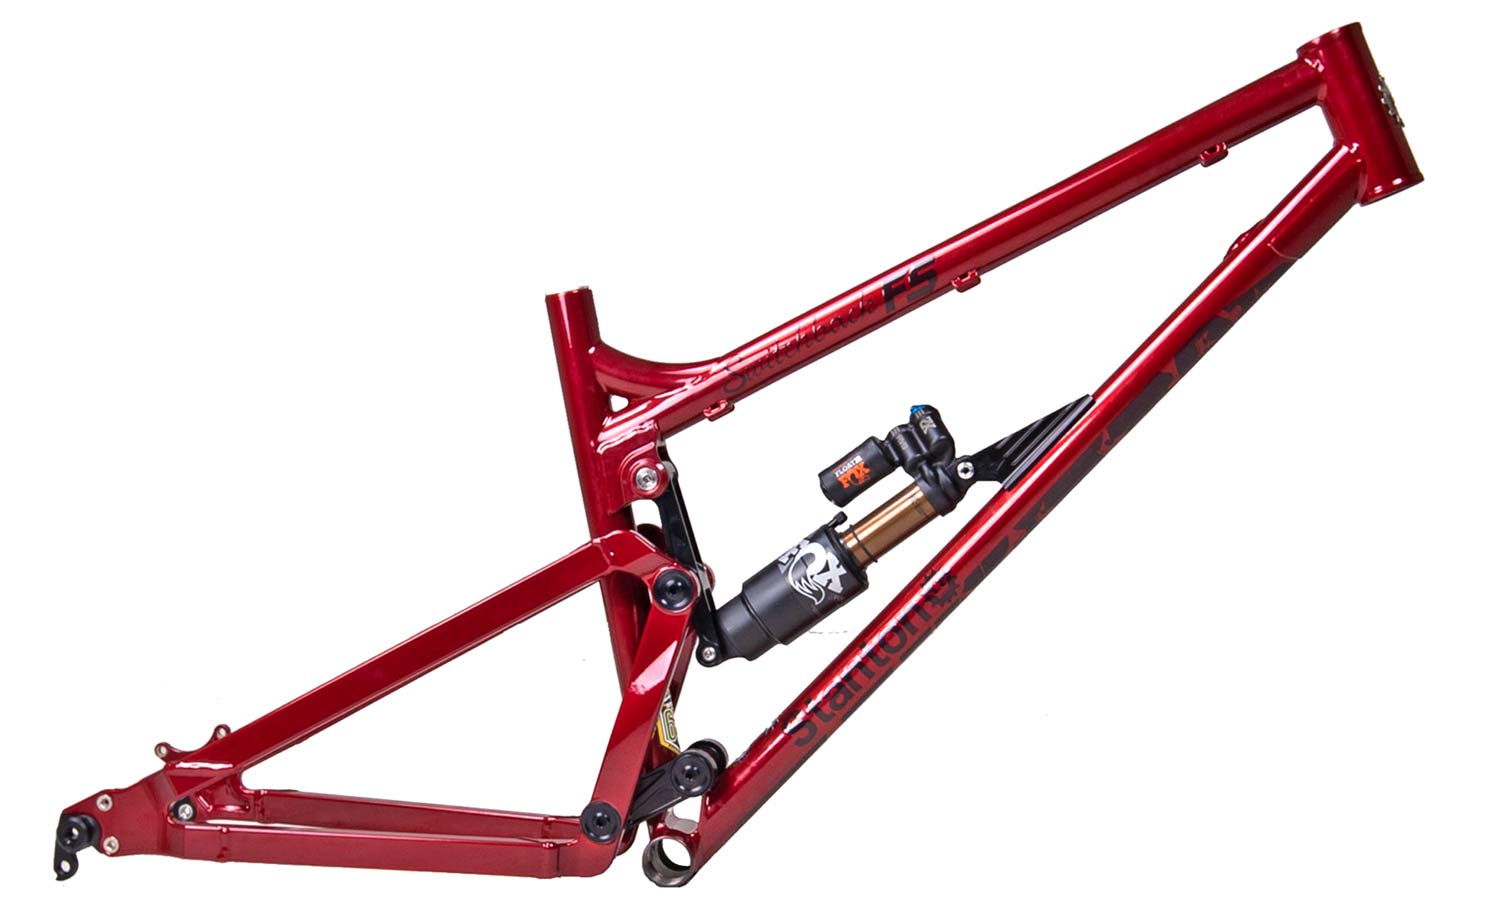 Stanton Switchback FS Switch9er FS_UK-made steel alloy aluminium 140mm 160mm all-mountain trail bikes